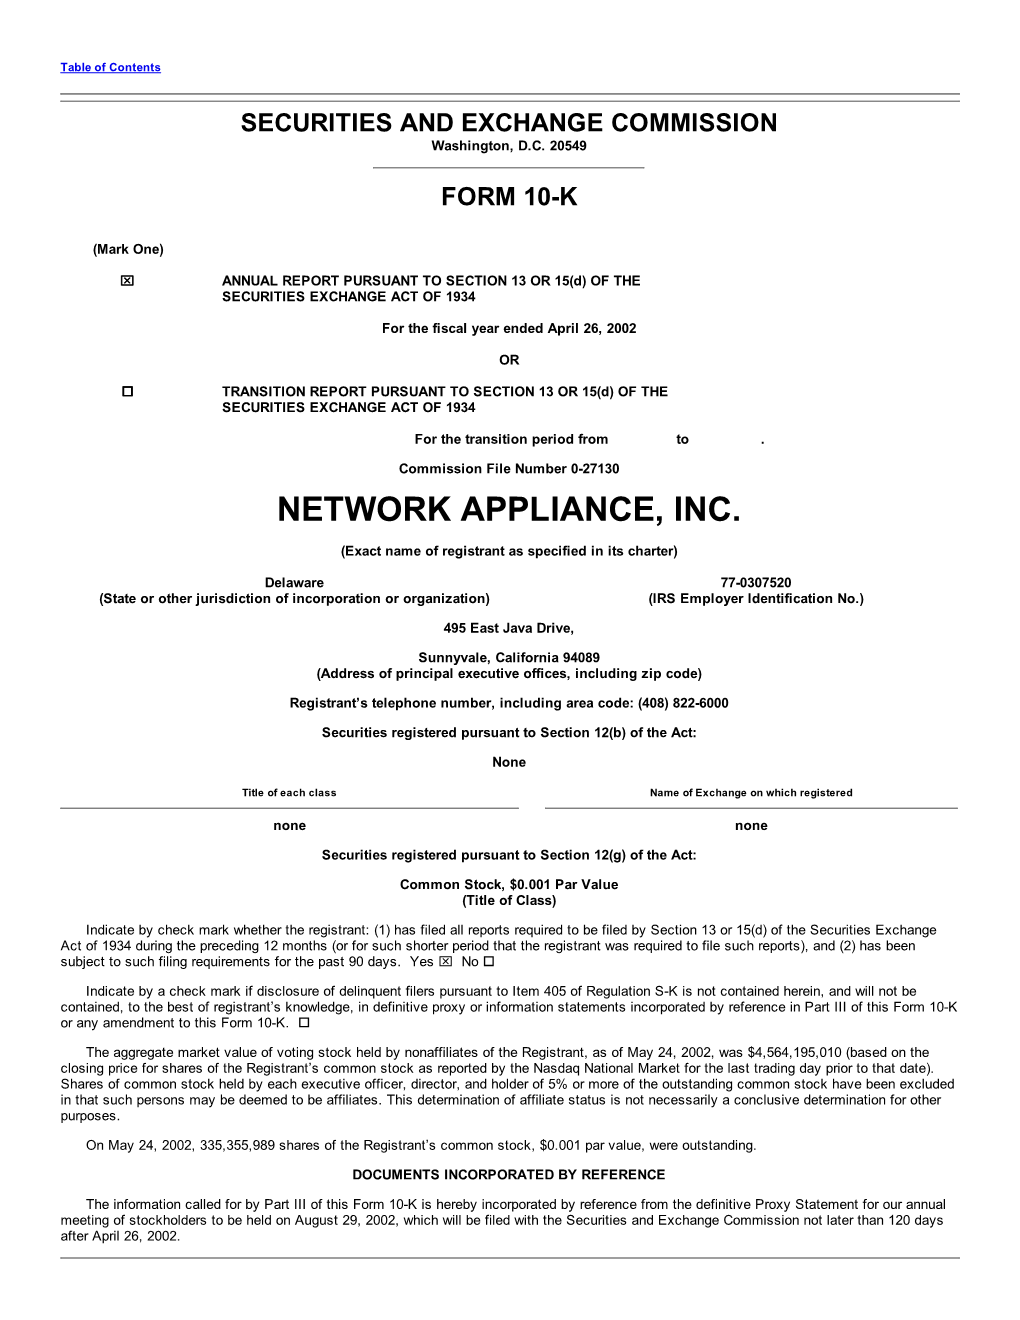 Network Appliance, Inc